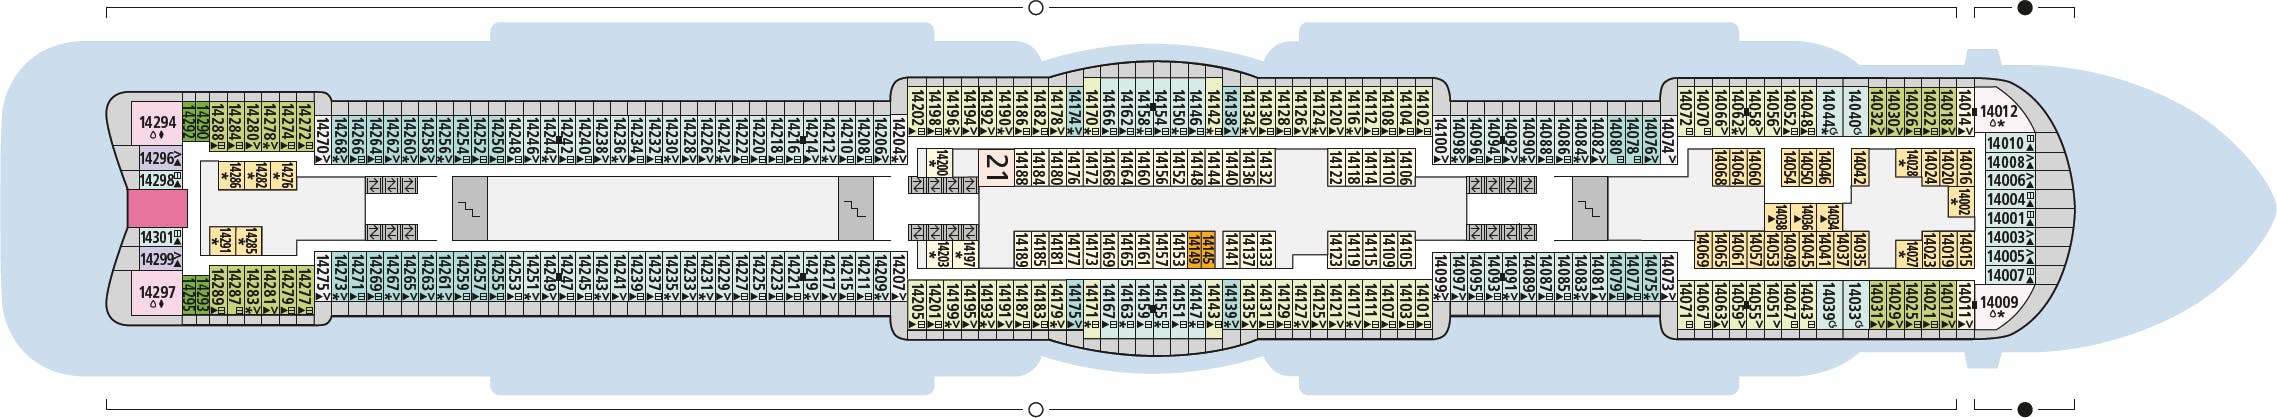 AIDAcosma - AIDA Cruises - Deck 14 (Deck 14)